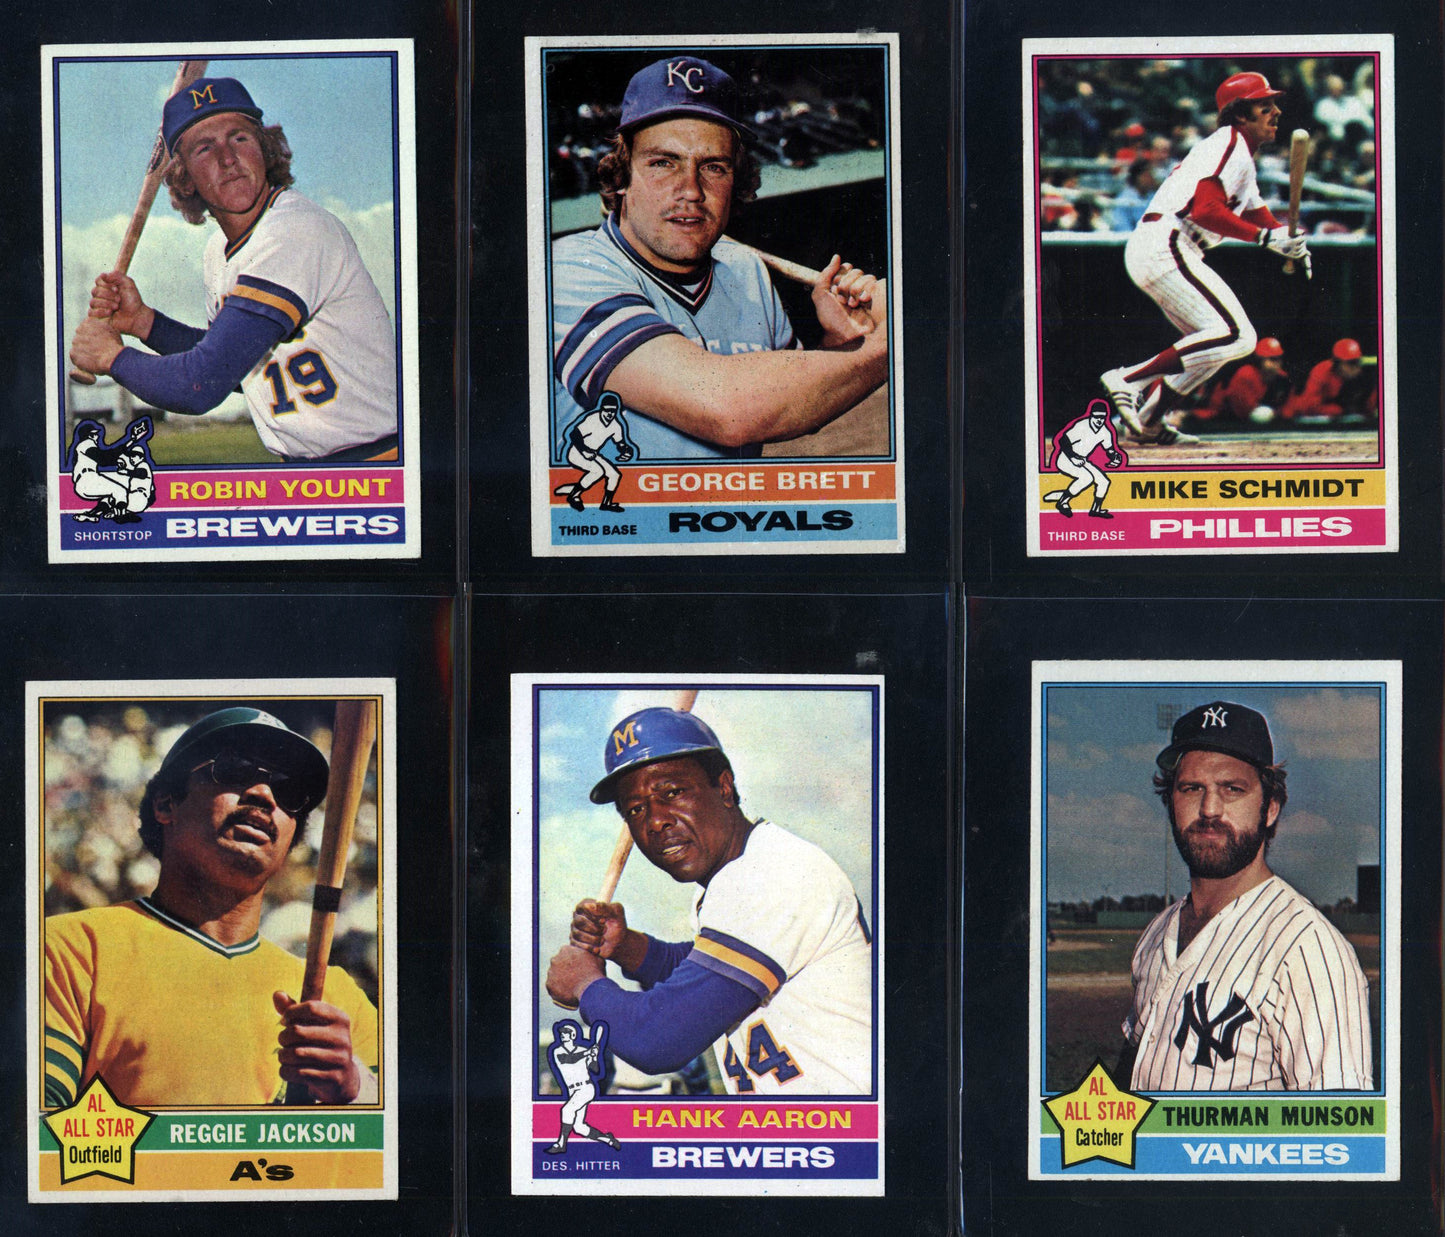 1976 Topps Baseball Set Break 660 Spot Random Card (Dennis Eckersley Rookie PSA 8, Nolan Ryan PSA 8, Pete Rose SGC 8.5, etc!)